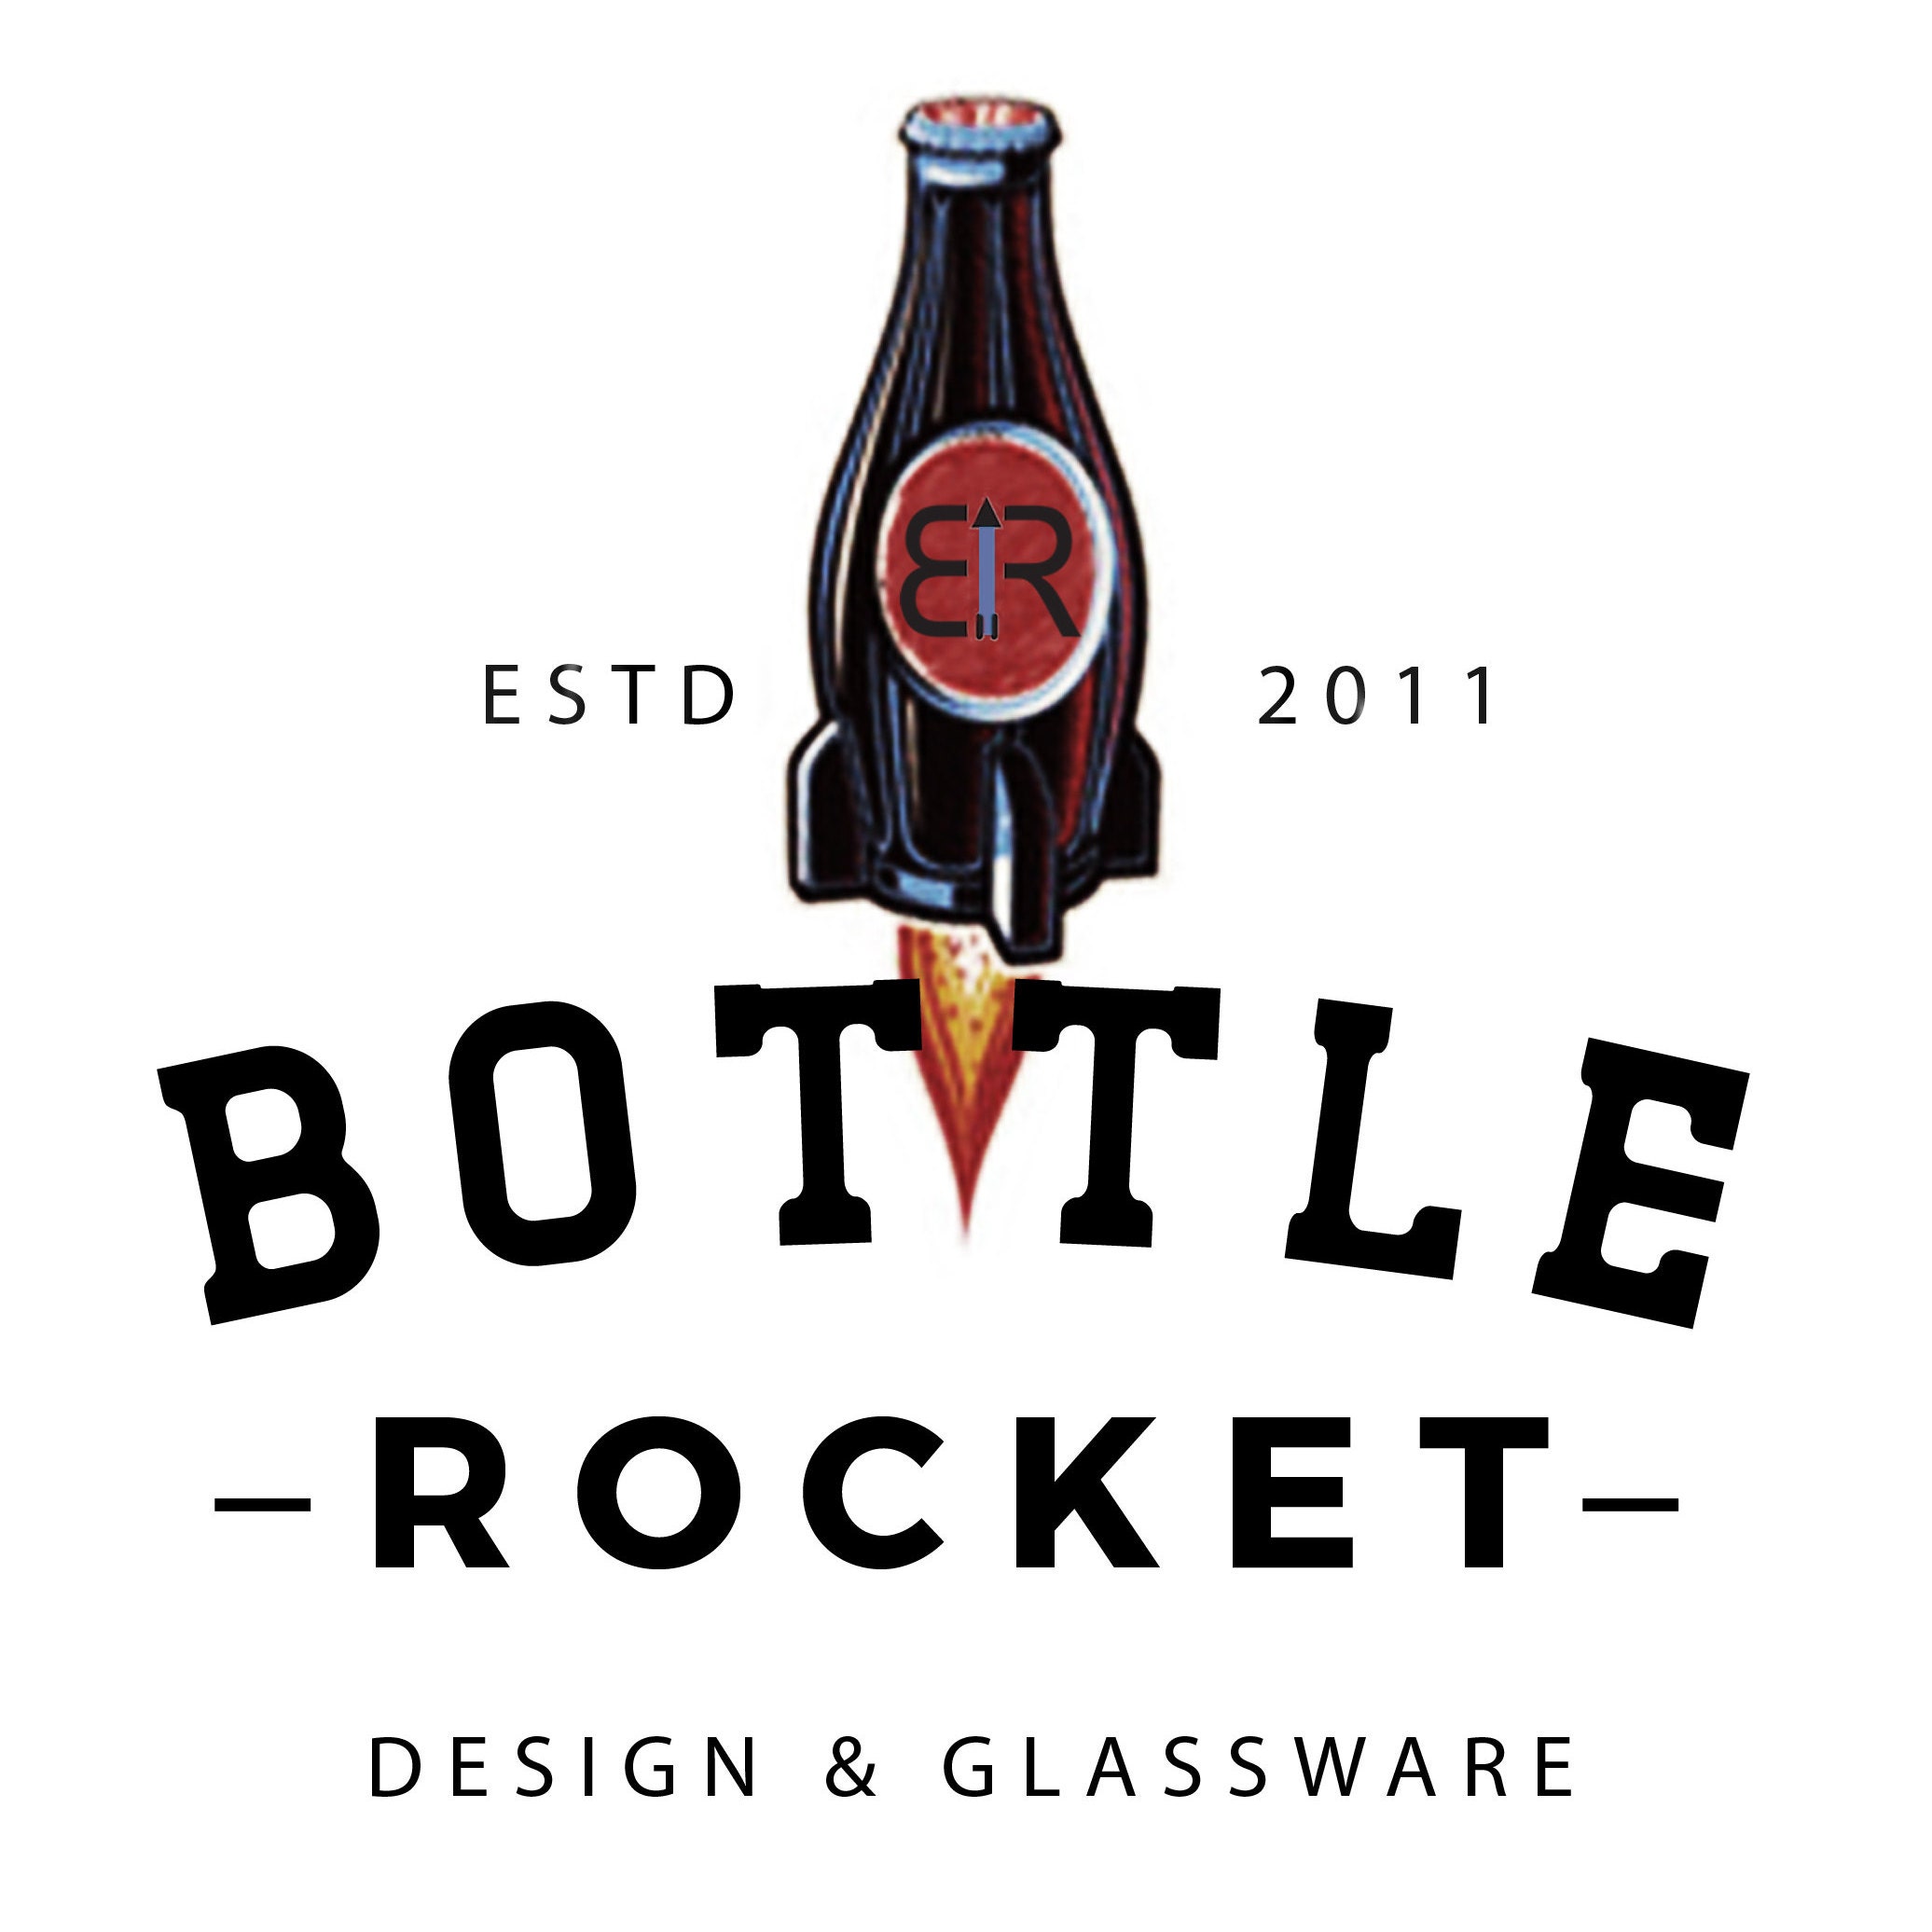 creative bottle rocket designs